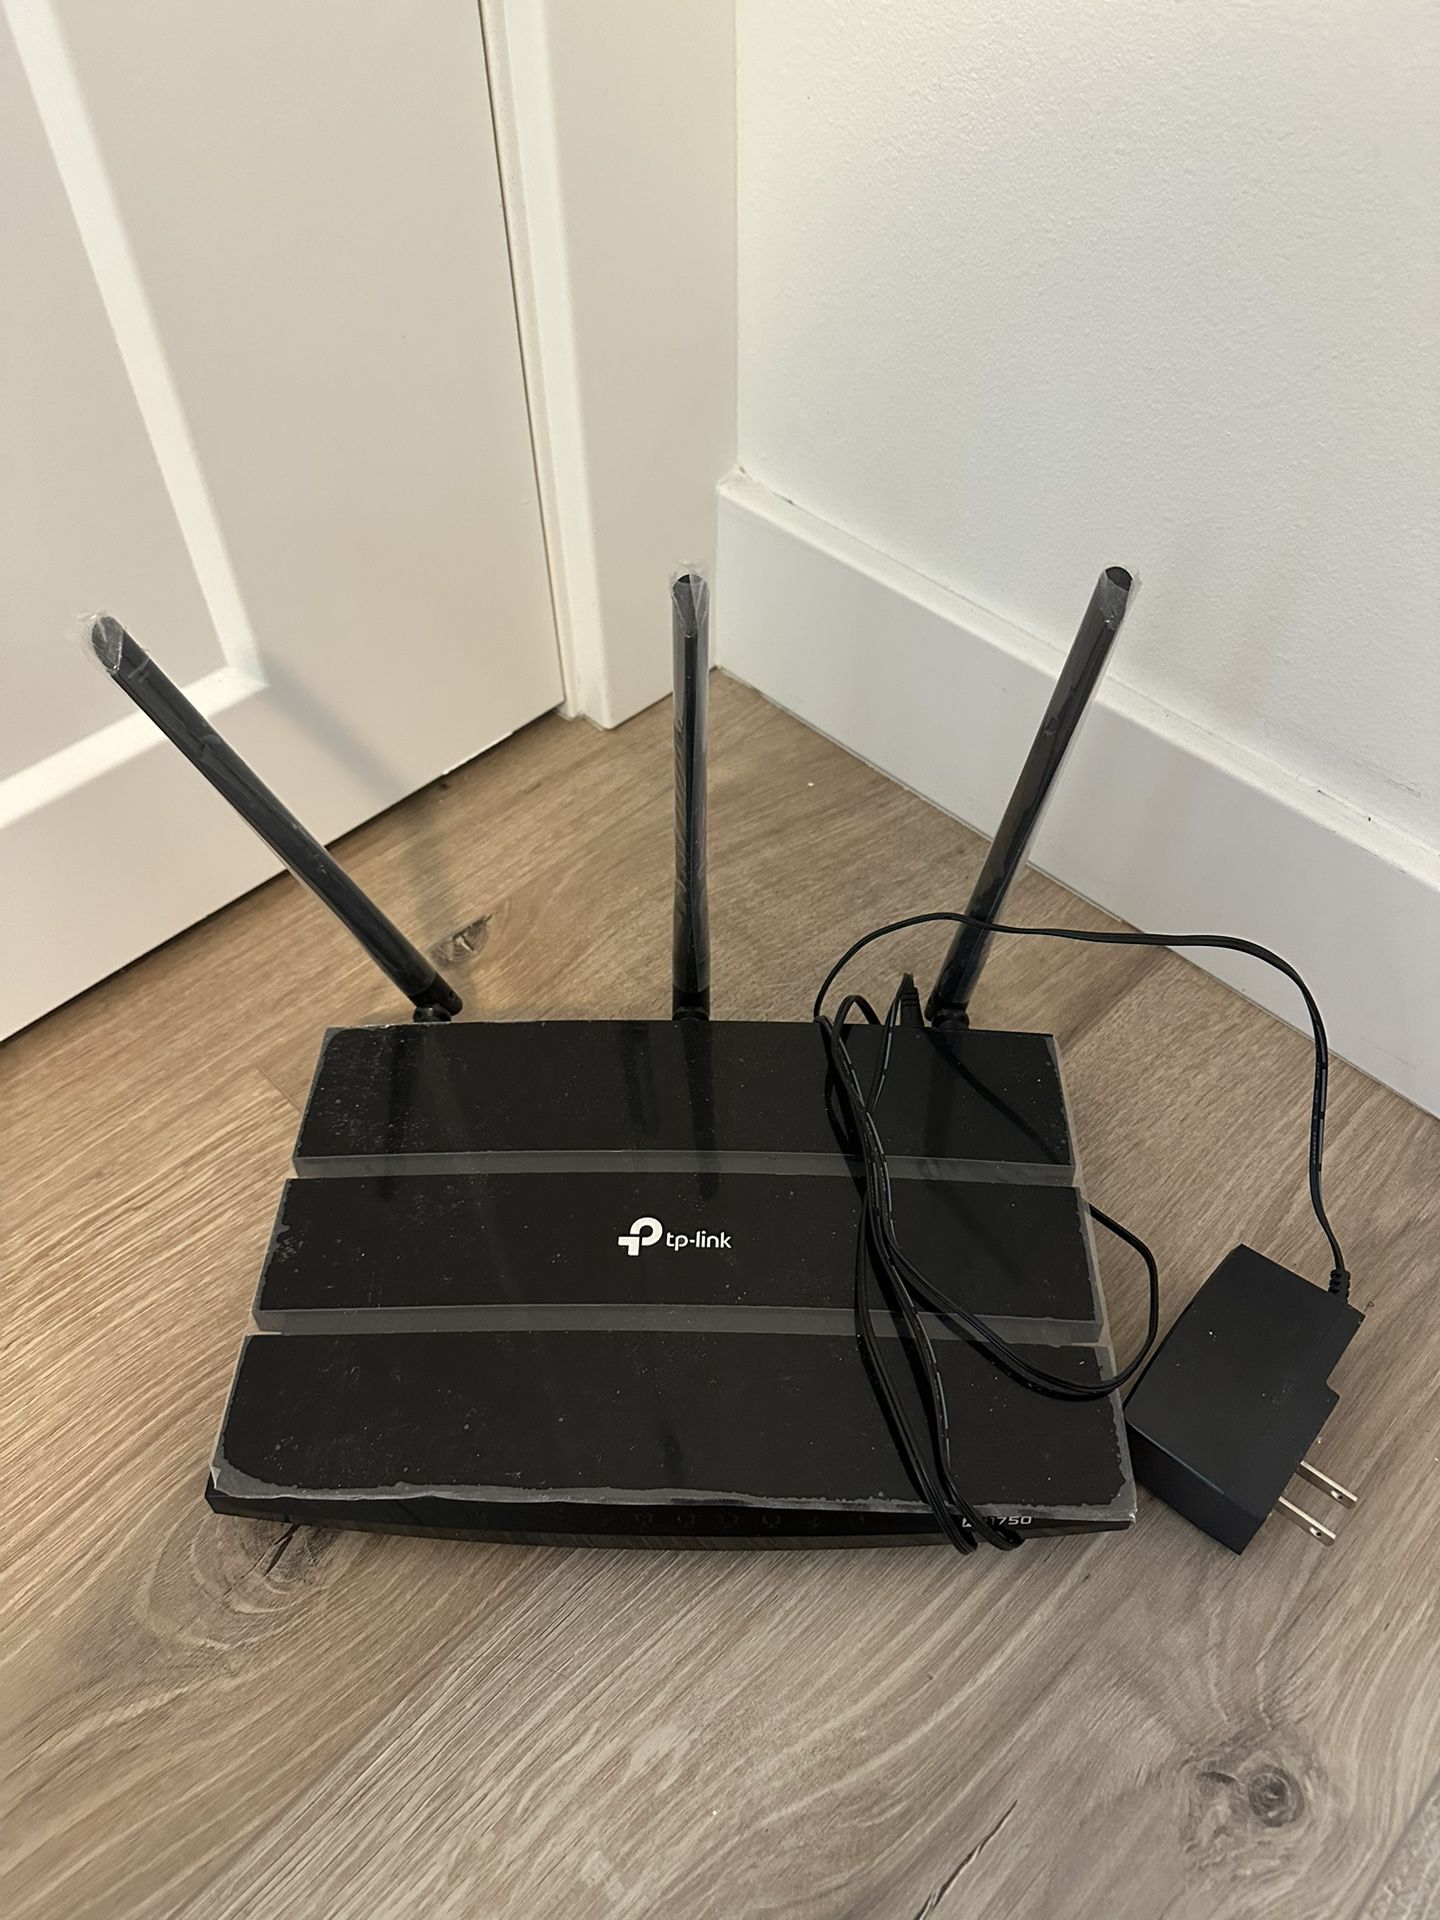 TP-Link AC1750 Smart WiFi Router (Archer A7) -Dual Band Gigabit Wireless Internet Router